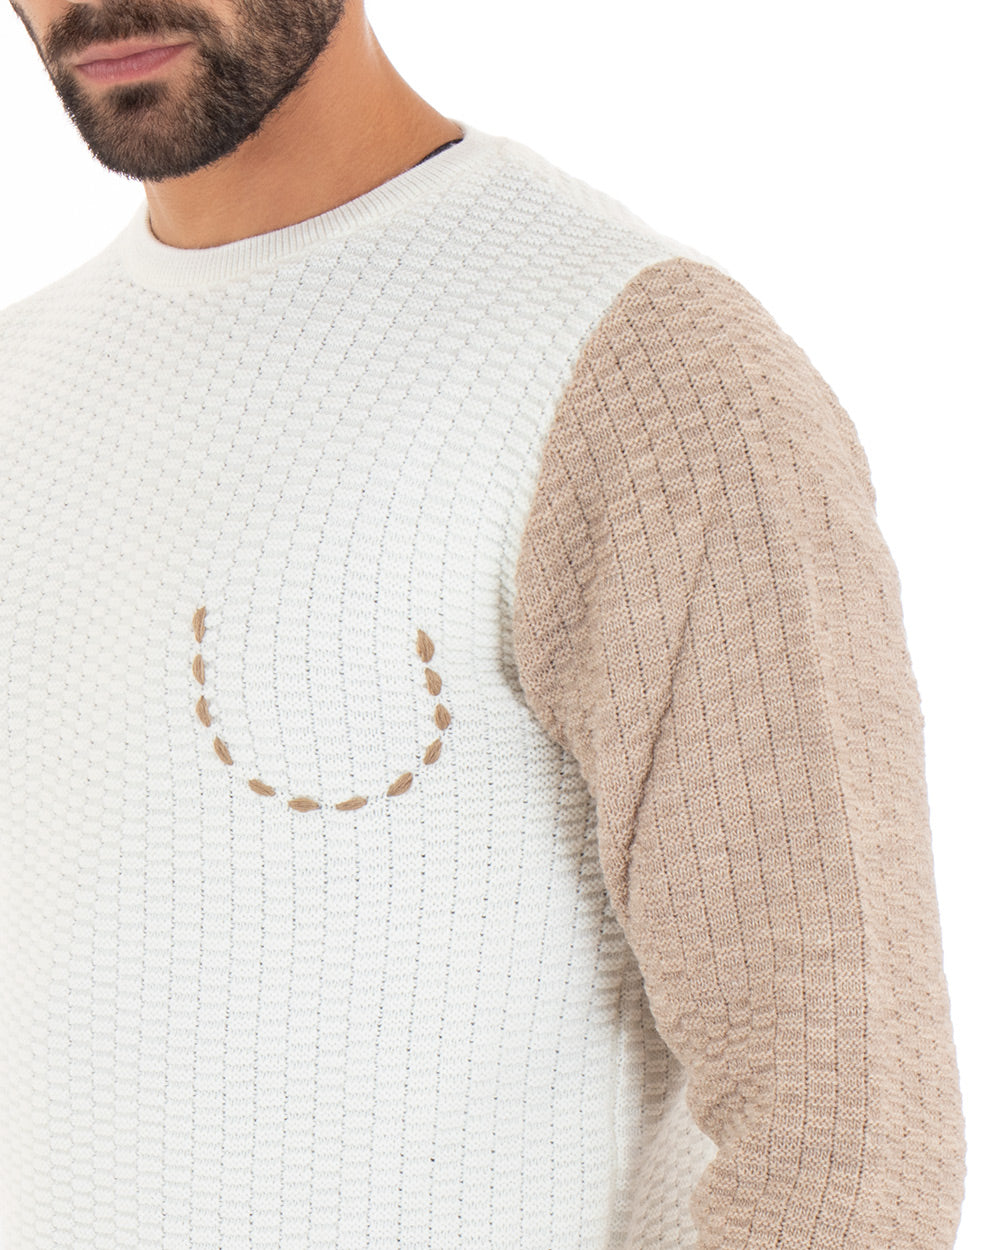 Paul Barrell Men's Sweater Two-Tone Pocket Beige White Long Sleeves GIOSAL